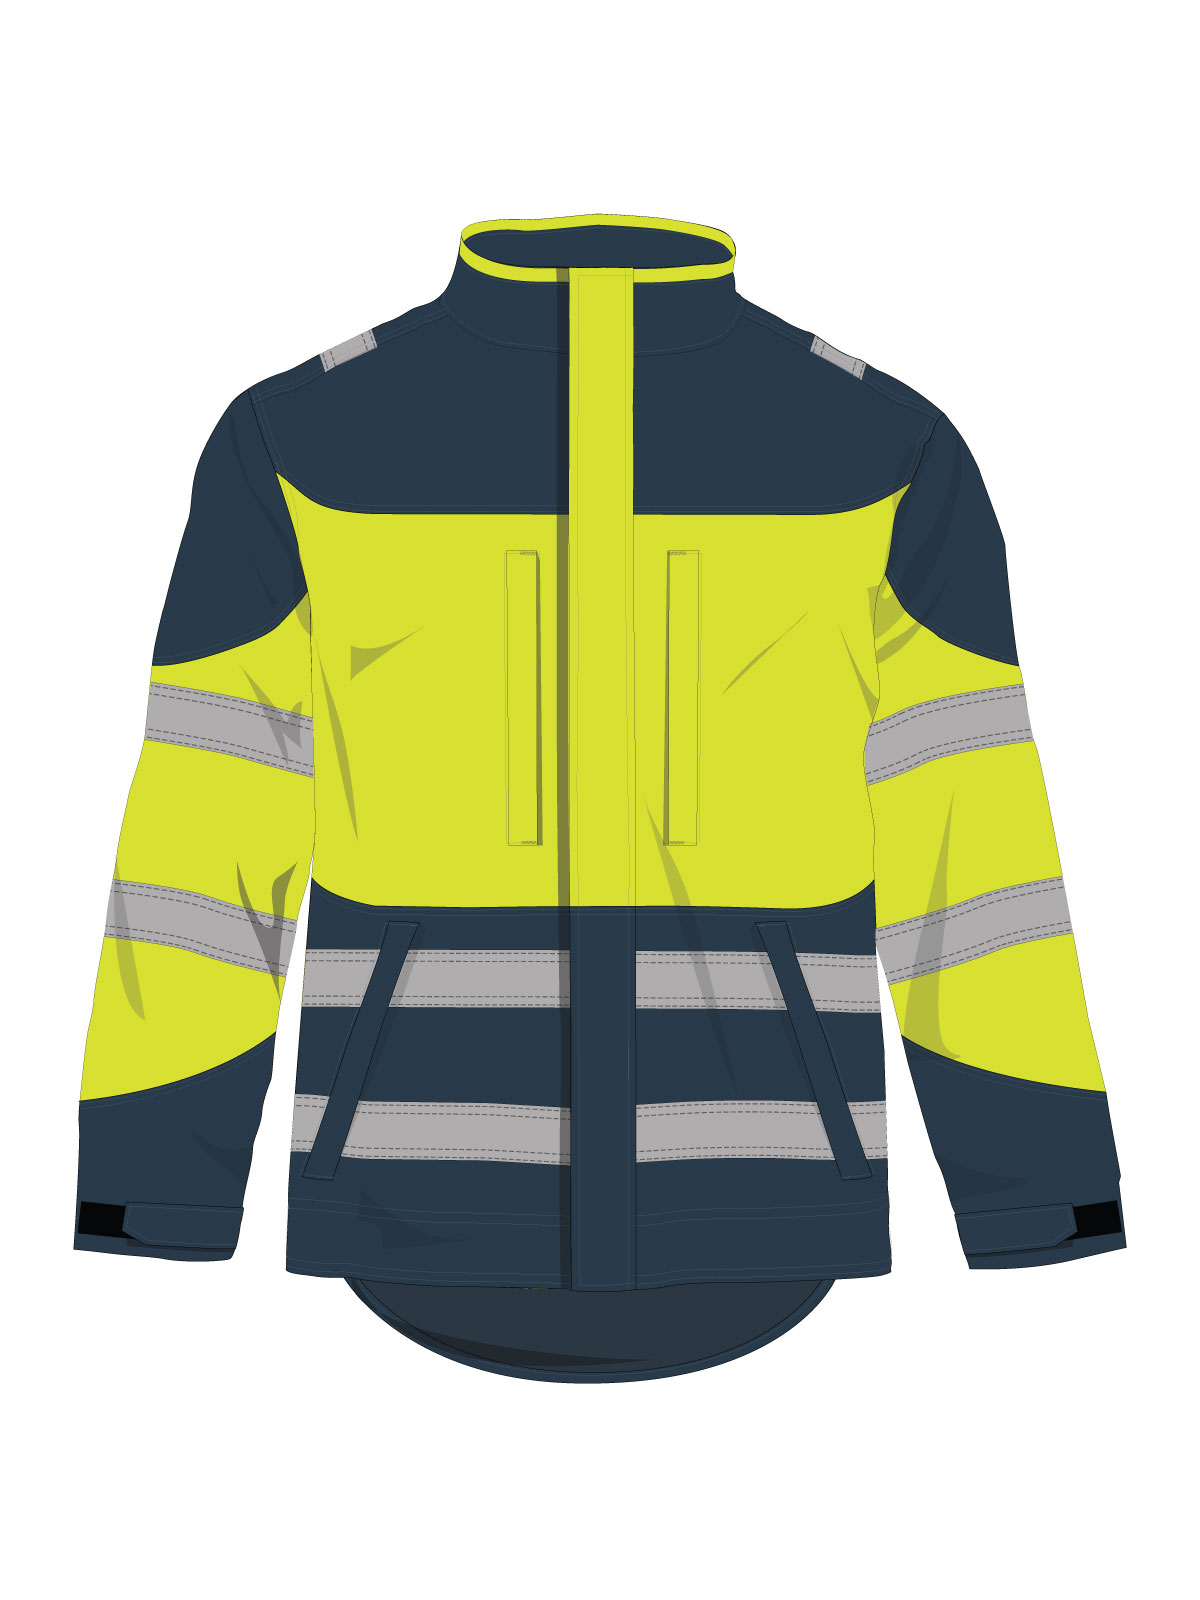 Modaflex Flame Resistant Jacket